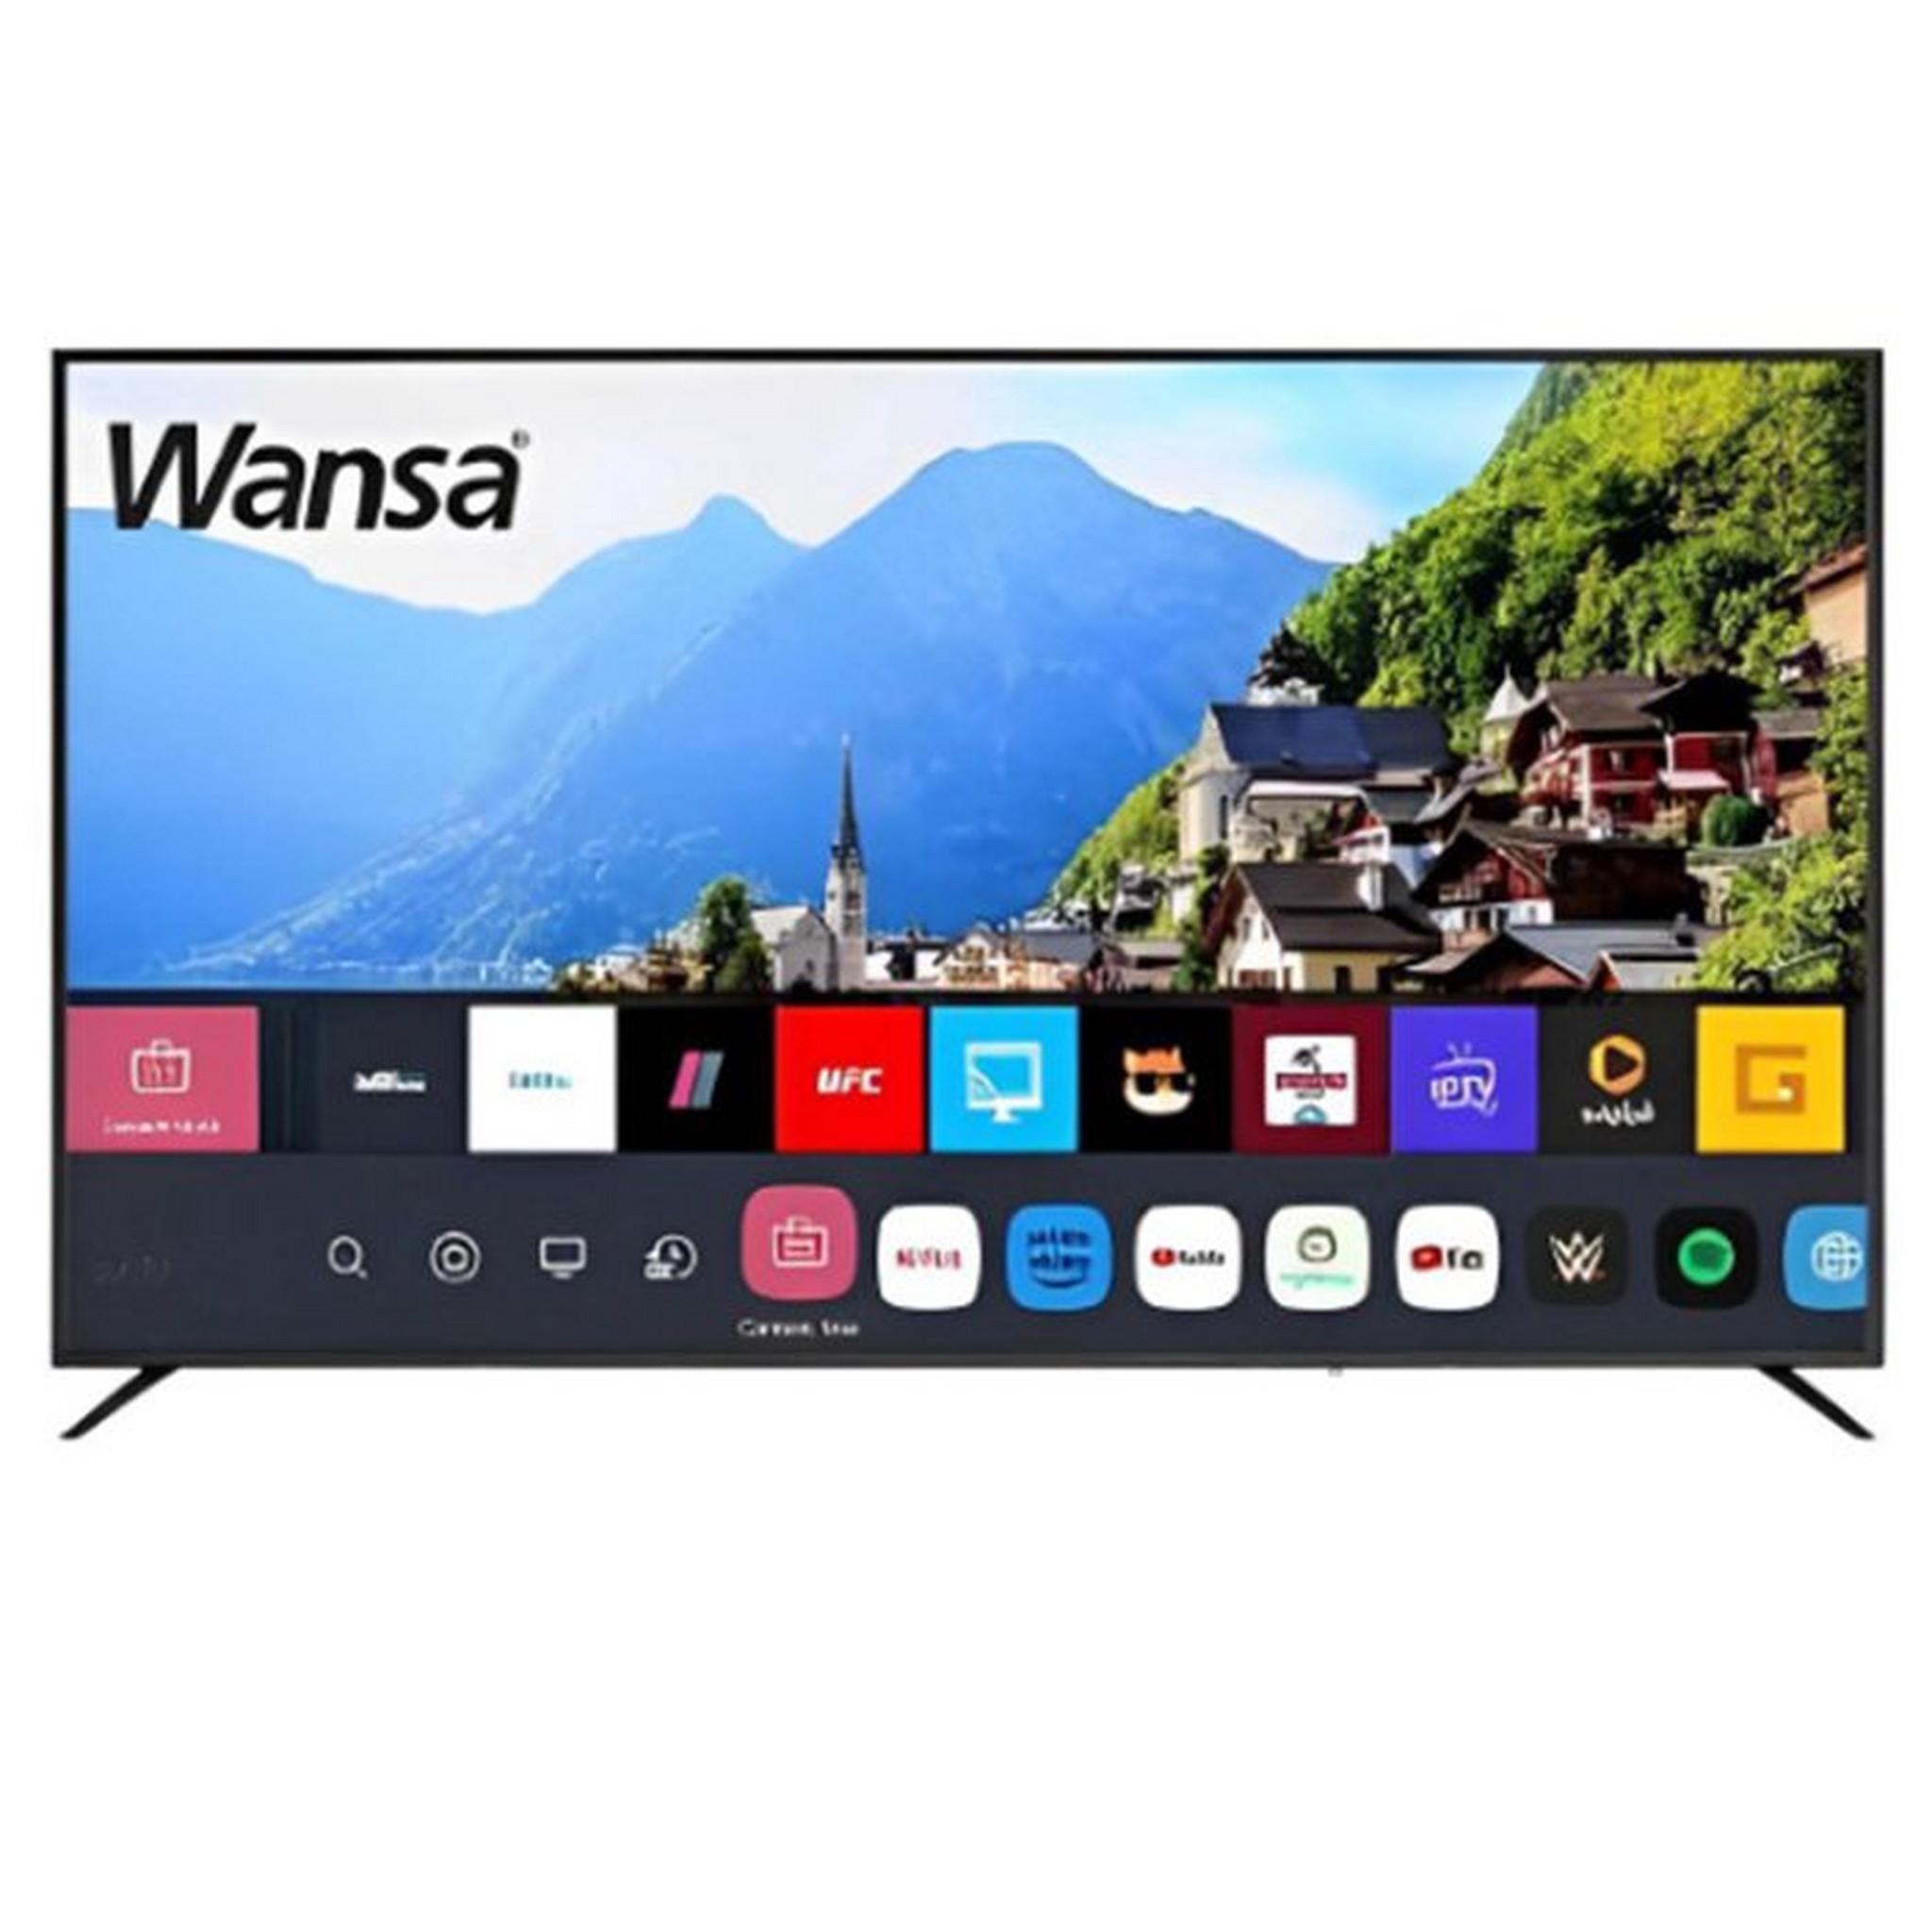 Wansa 70-inch UHD LED Smart TV, WUD75MWO60 – Black